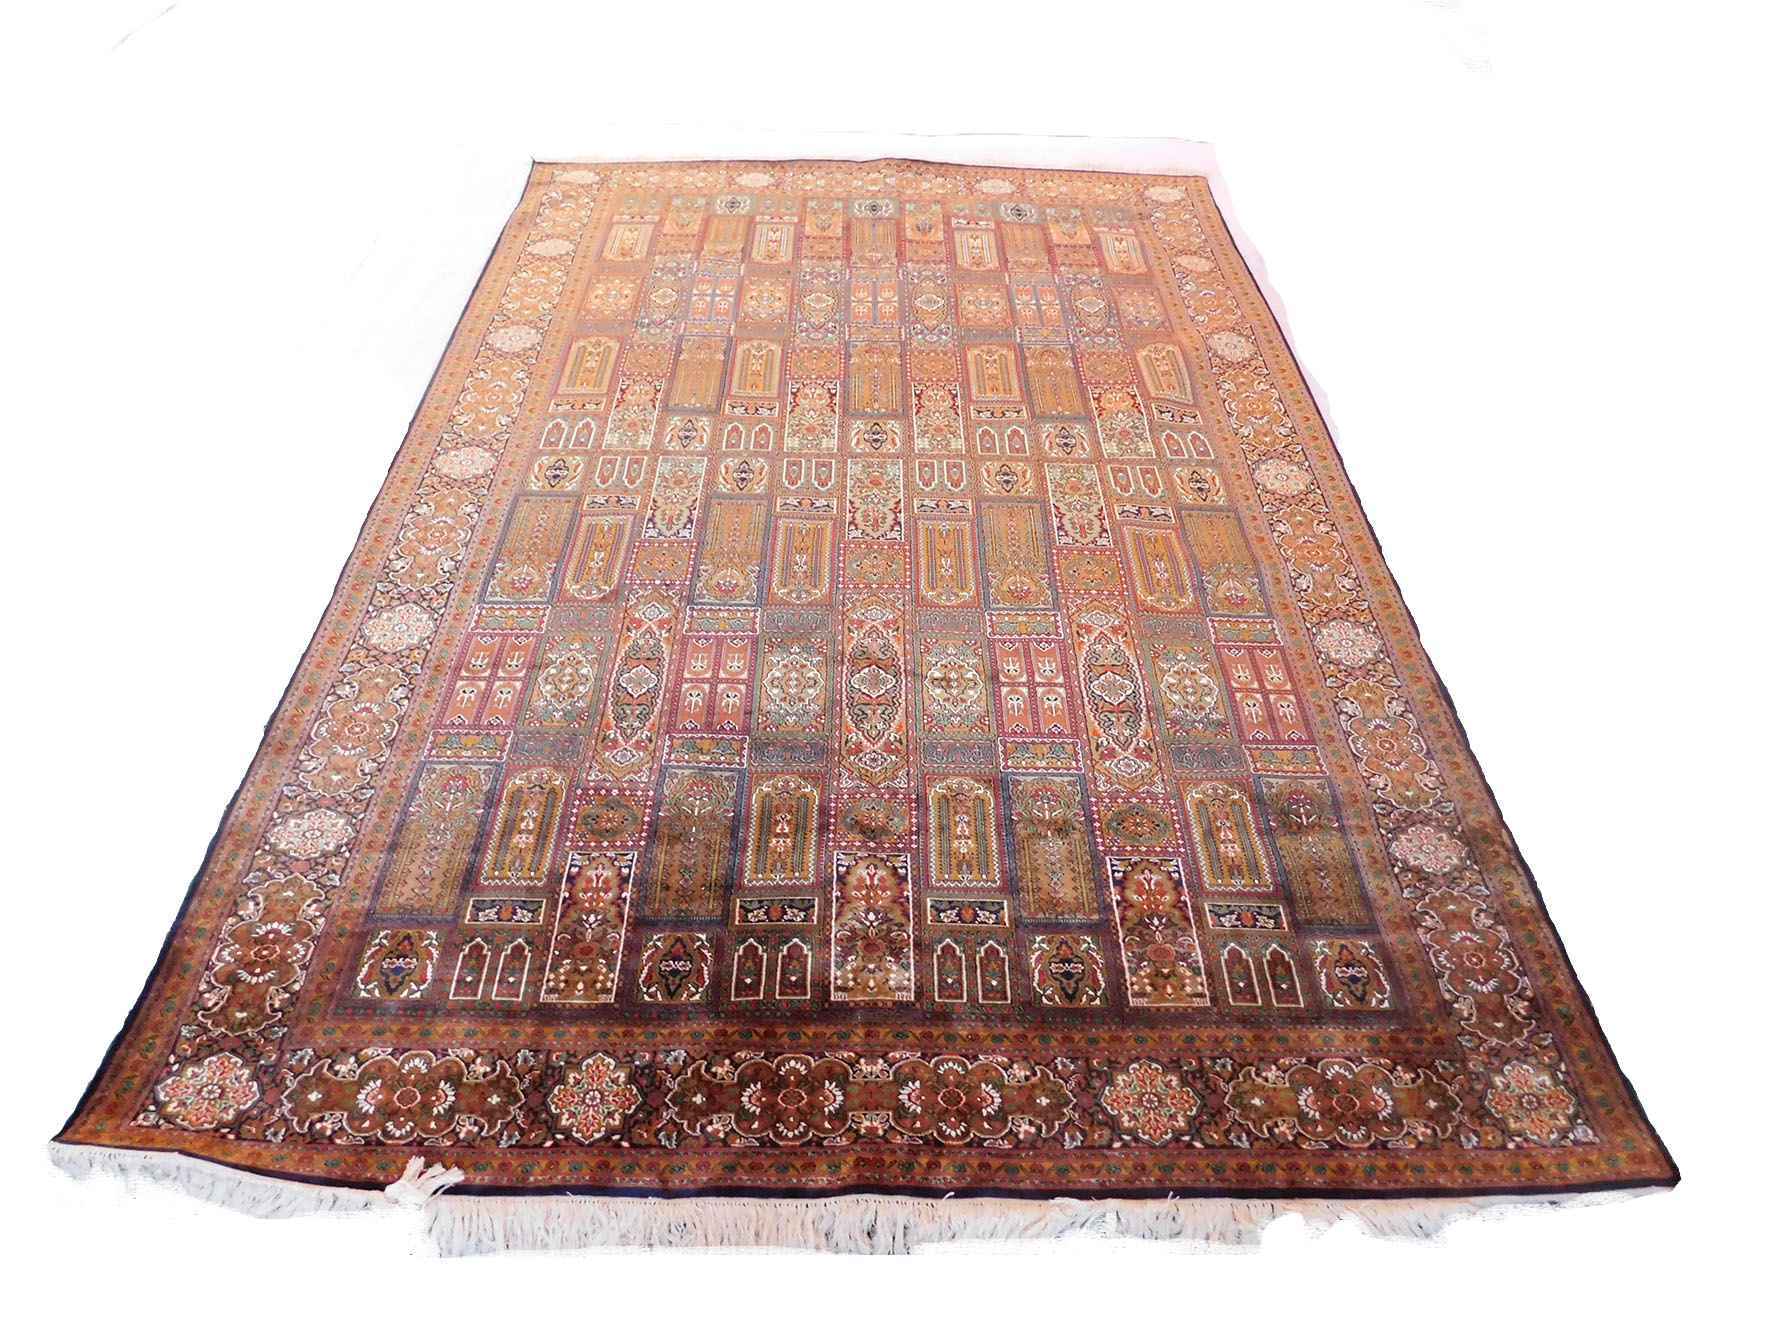 Size 6x 9 feet's Hand-made Carpet (KE 25)